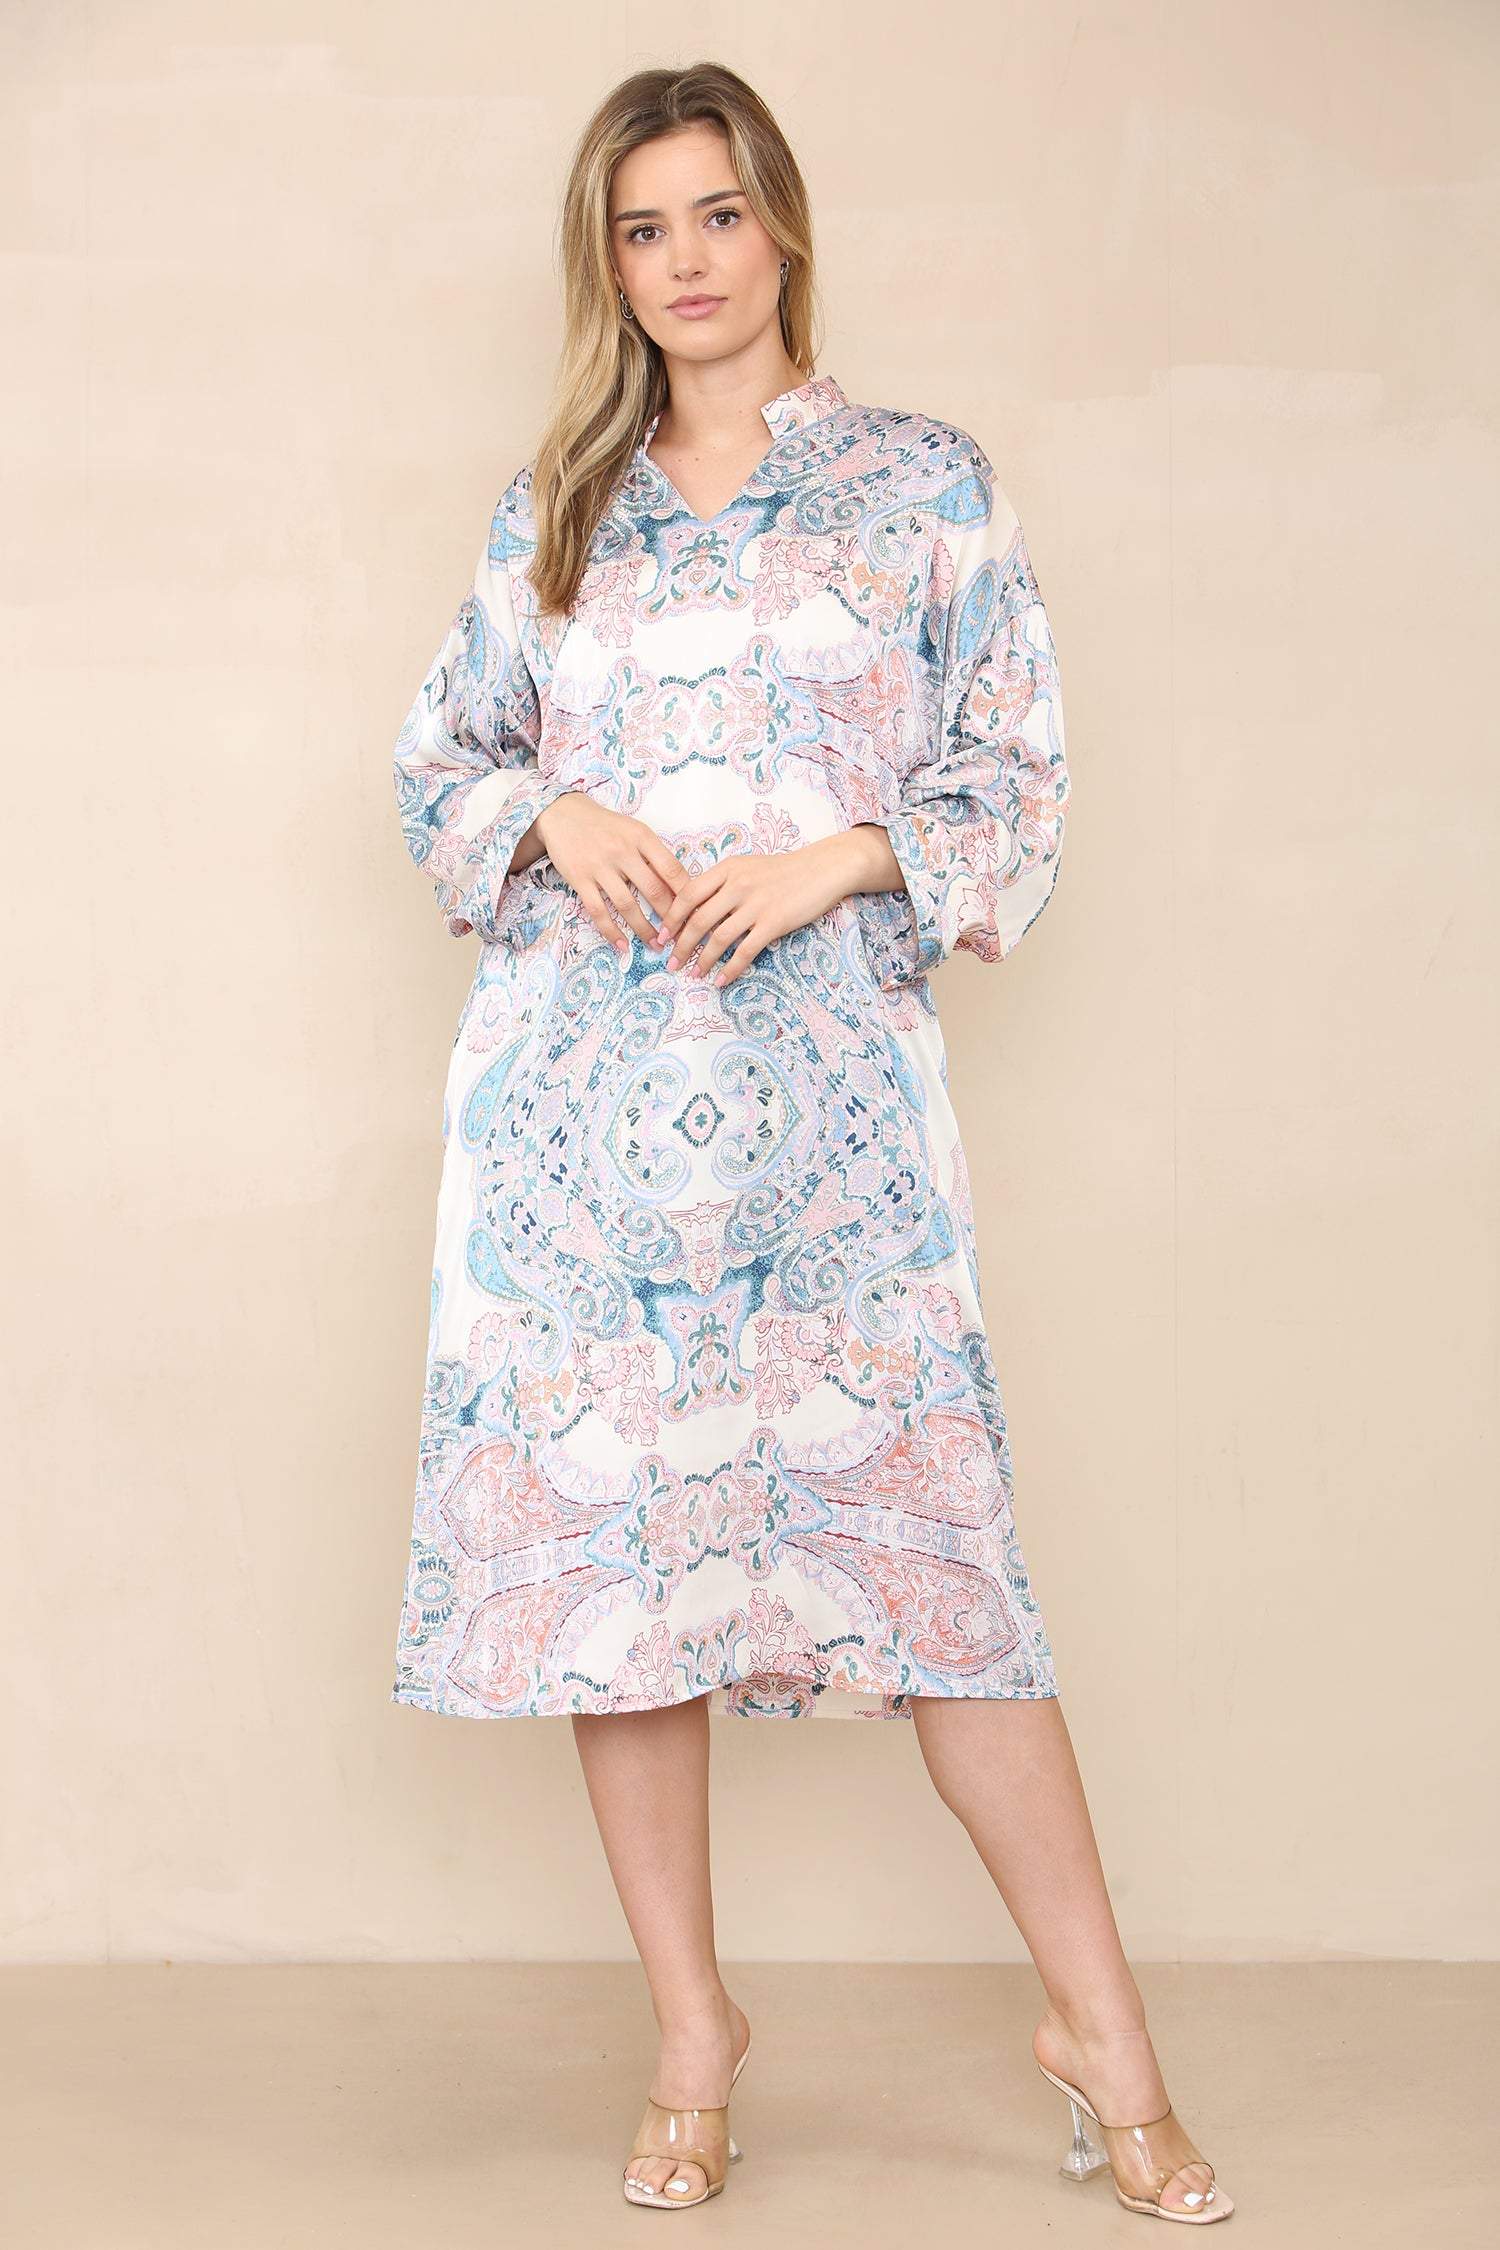 Love Sunshine Blue Pink Paisley Print Satin Kaftan Tunic Dress Casual Dress Dress with Pockets Garden Party Dress Holiday Dress LS-2222 Summer Dress